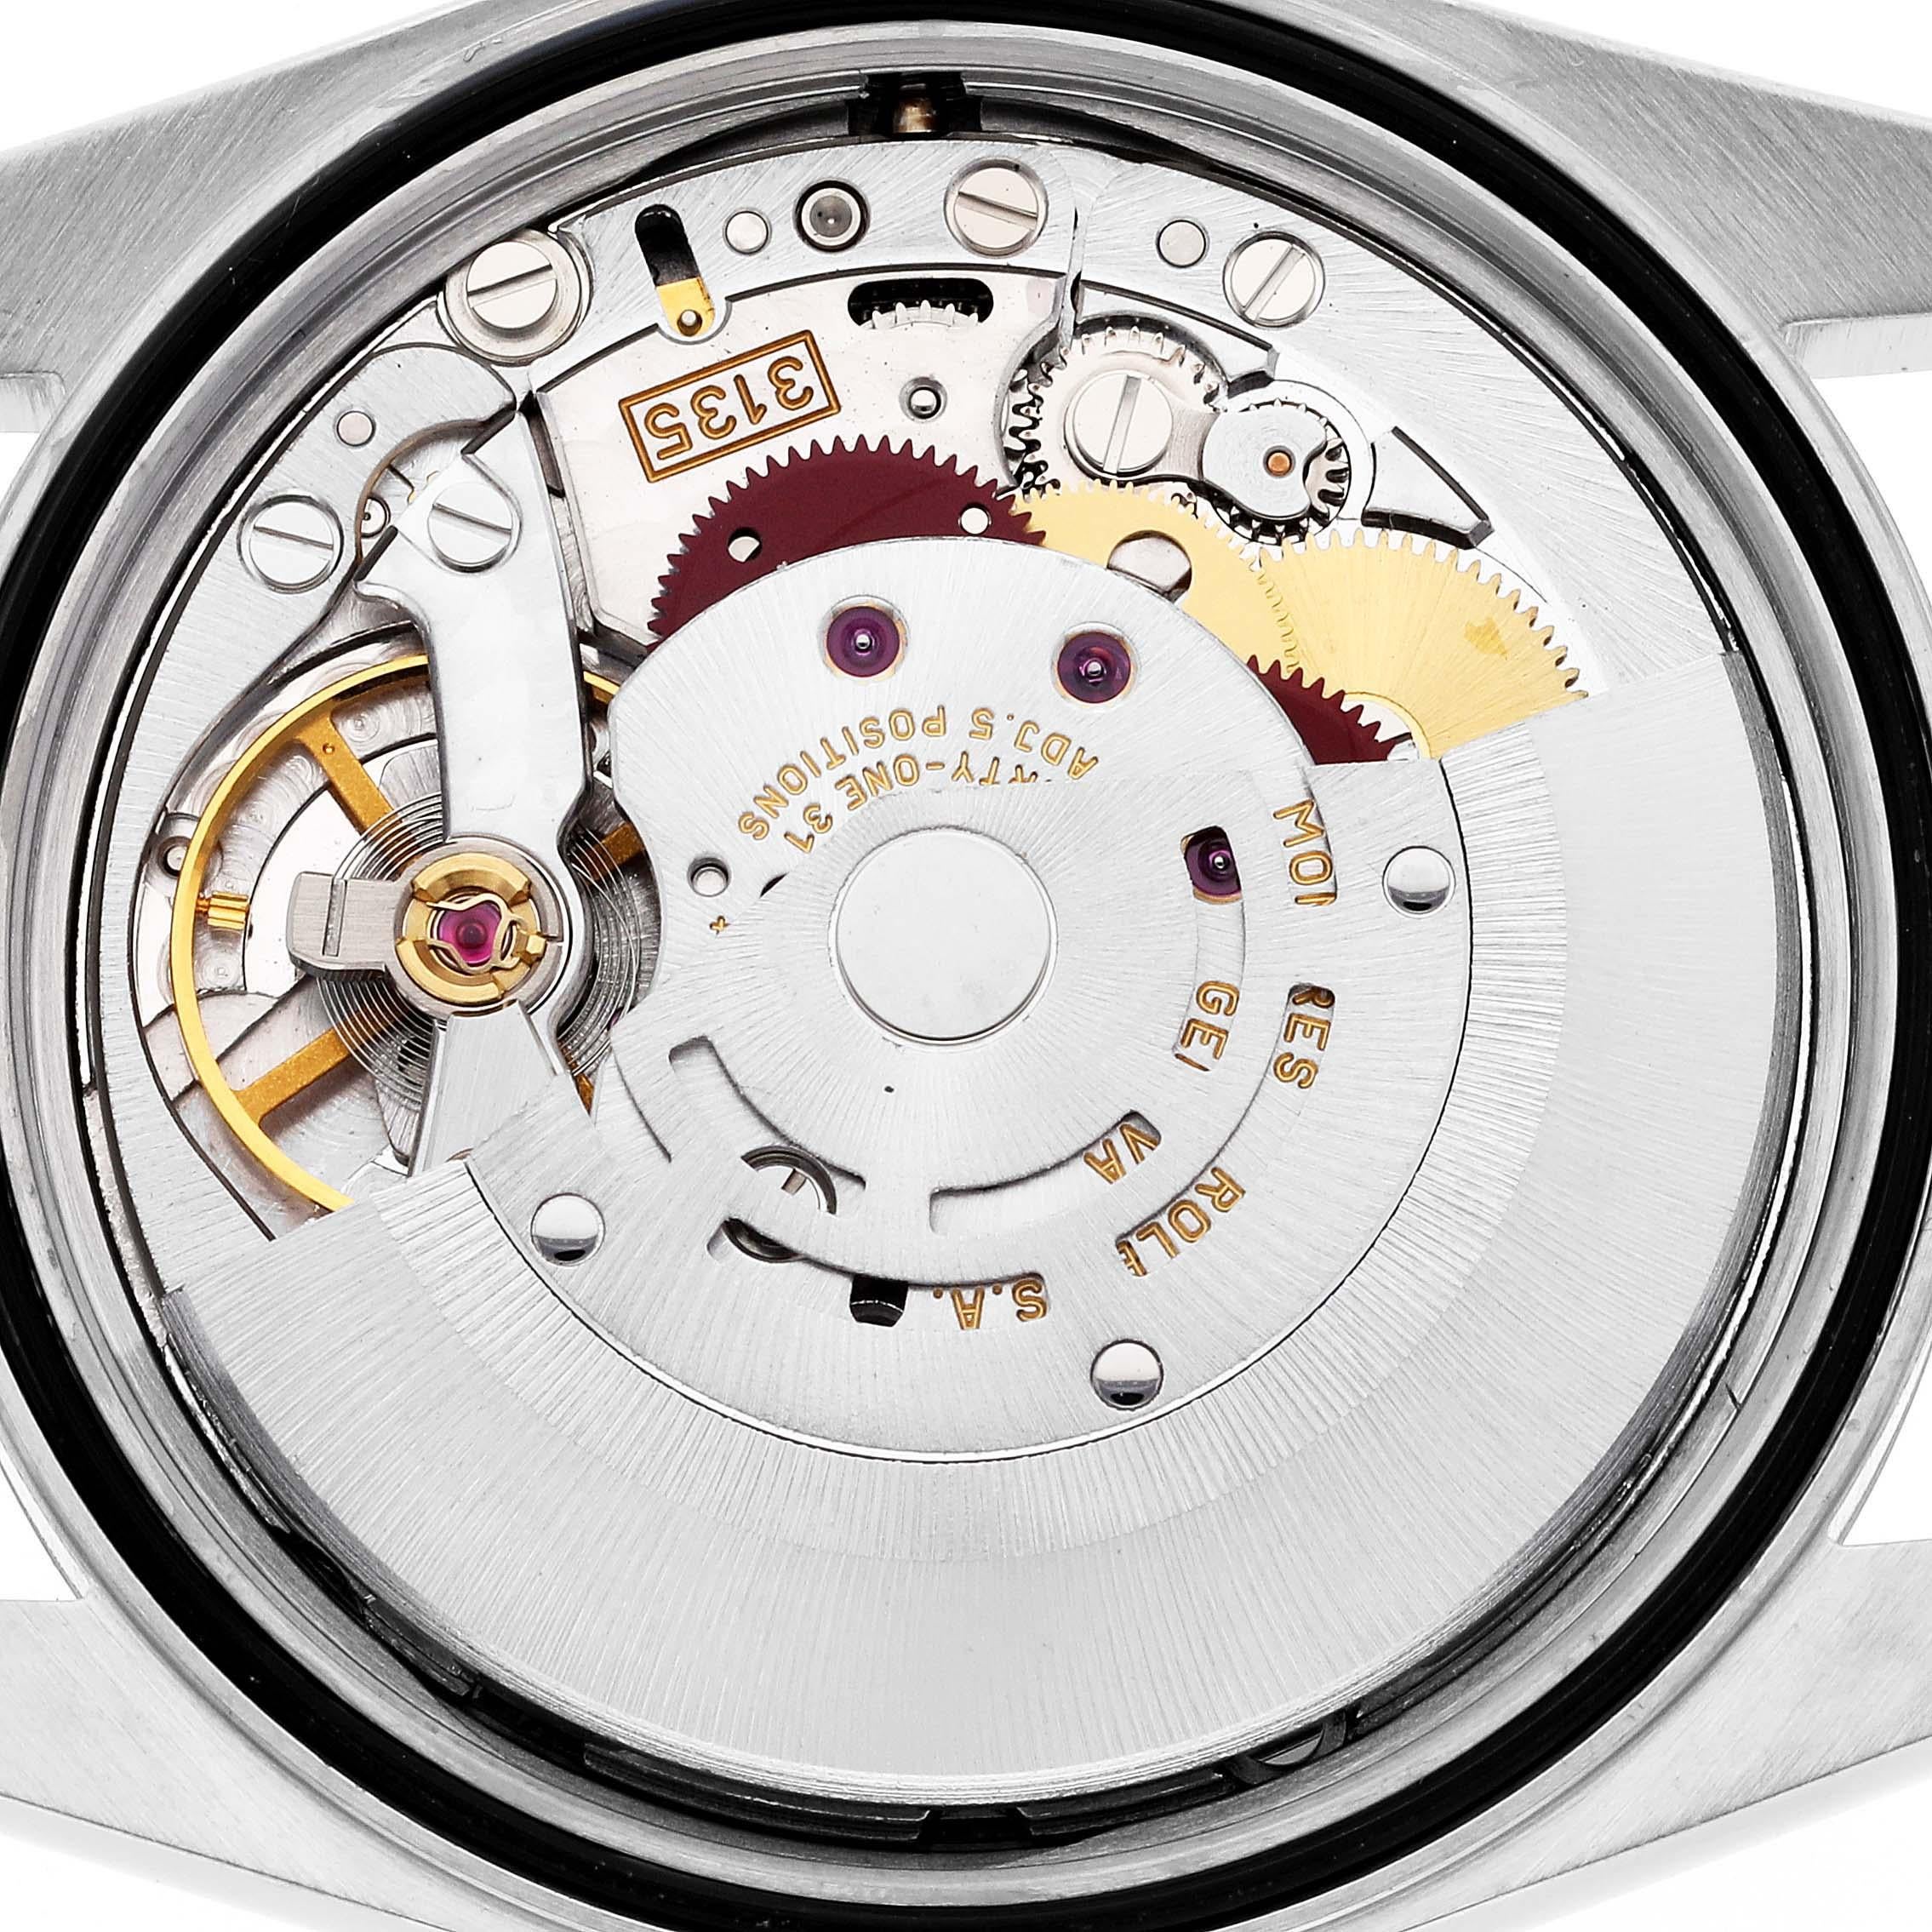 Rolex Datejust Steel White Gold Silver Diamond Dial Mens Watch 16234 5